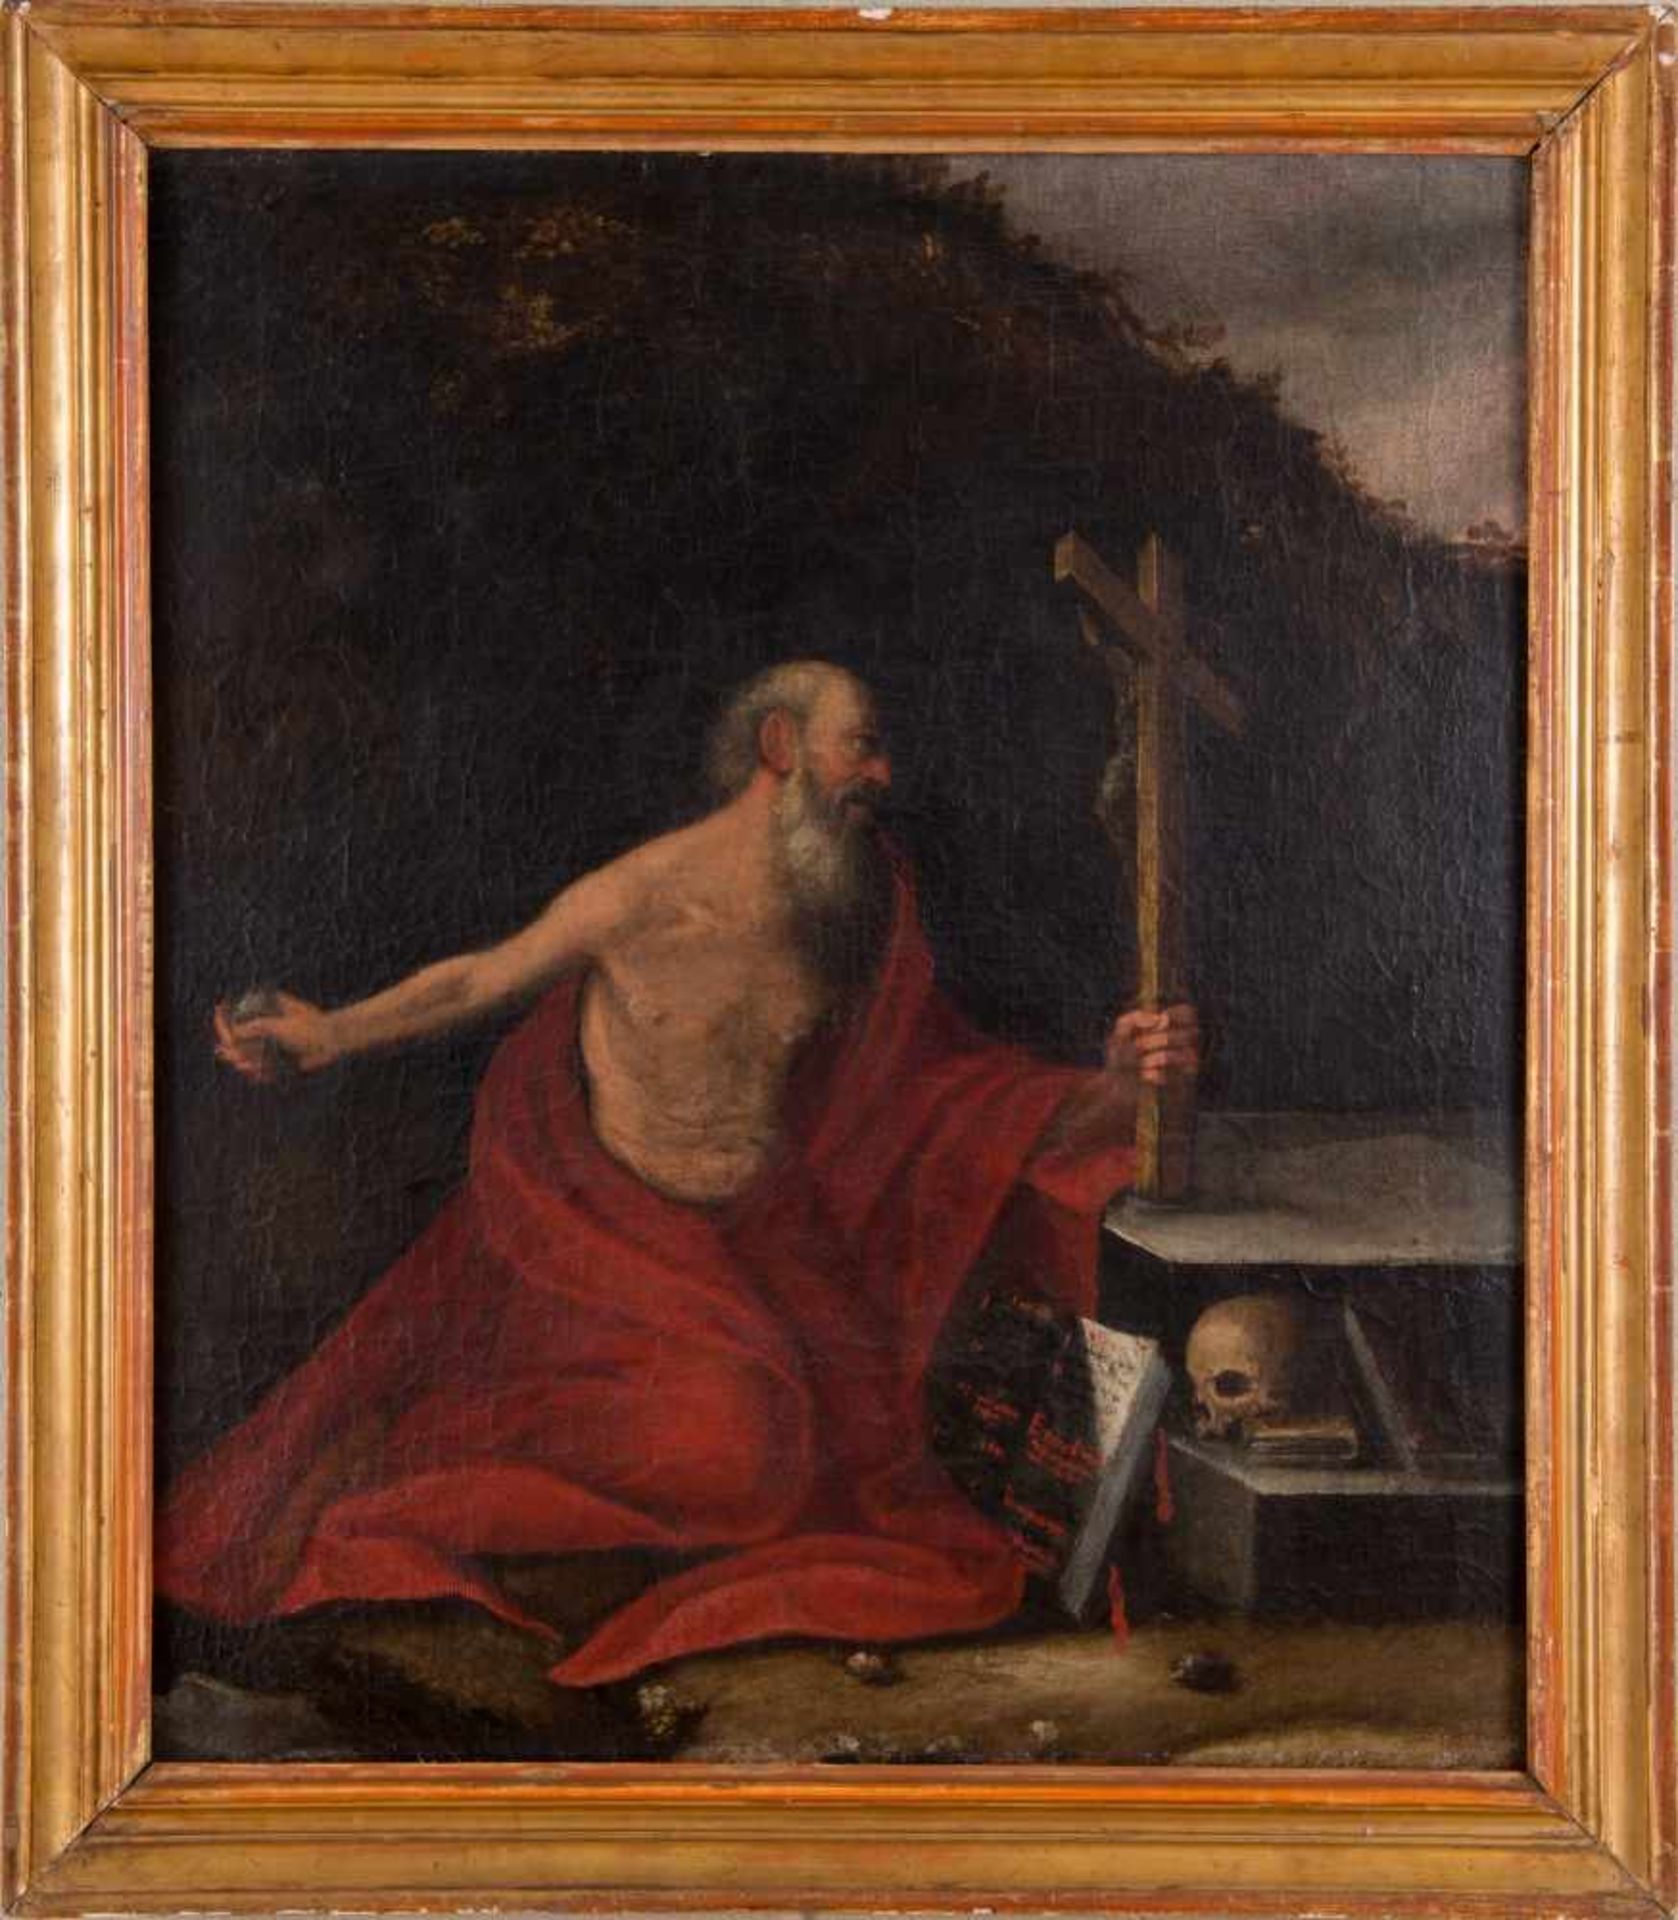 PITTORE LOMBARDO, XVII secolo. "San Girolamo", olio su tela. Cm 82x72. - Bild 2 aus 3